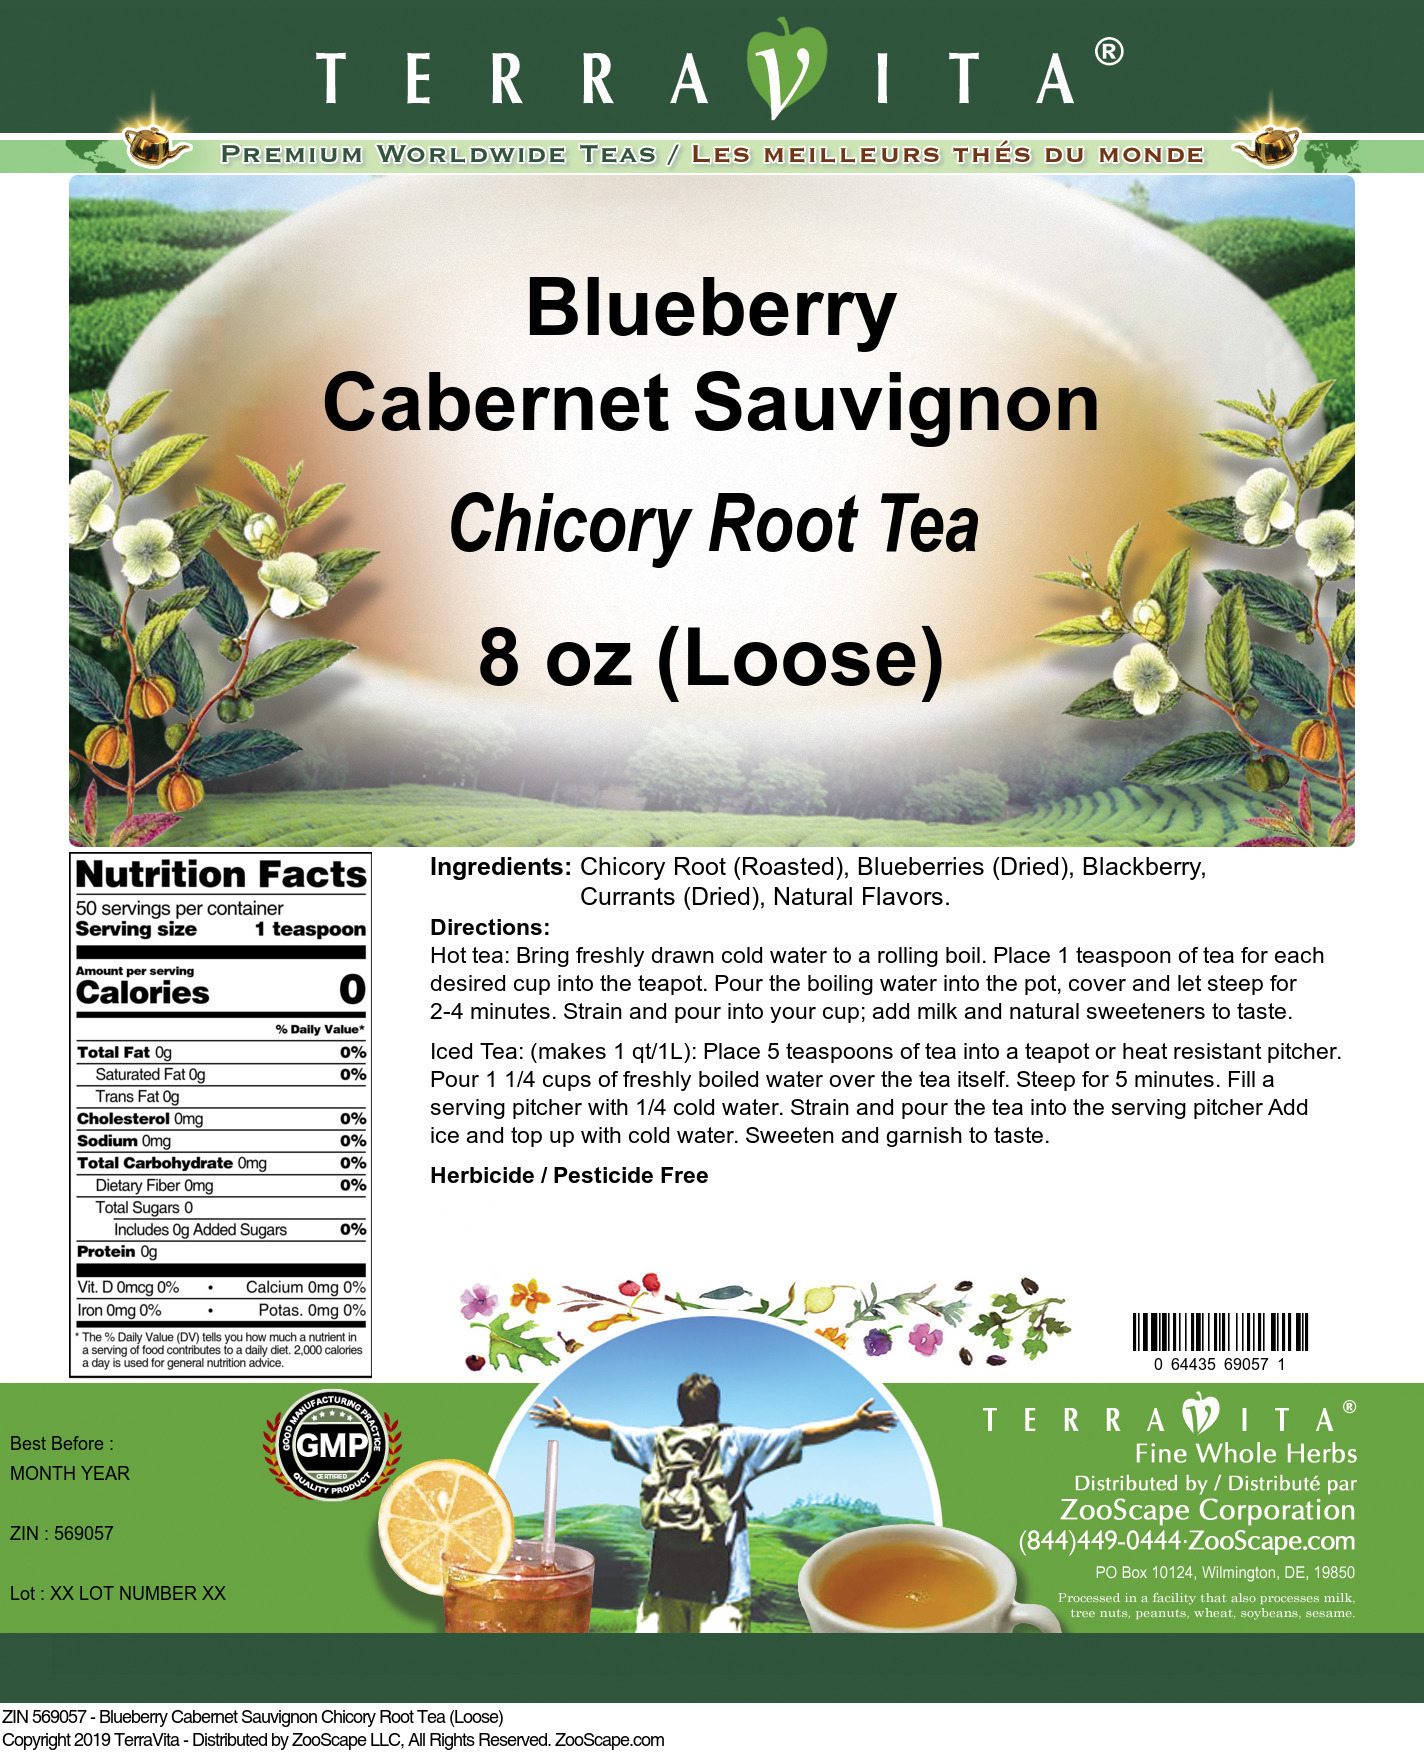 Blueberry Cabernet Sauvignon Chicory Root Tea (Loose) - Label